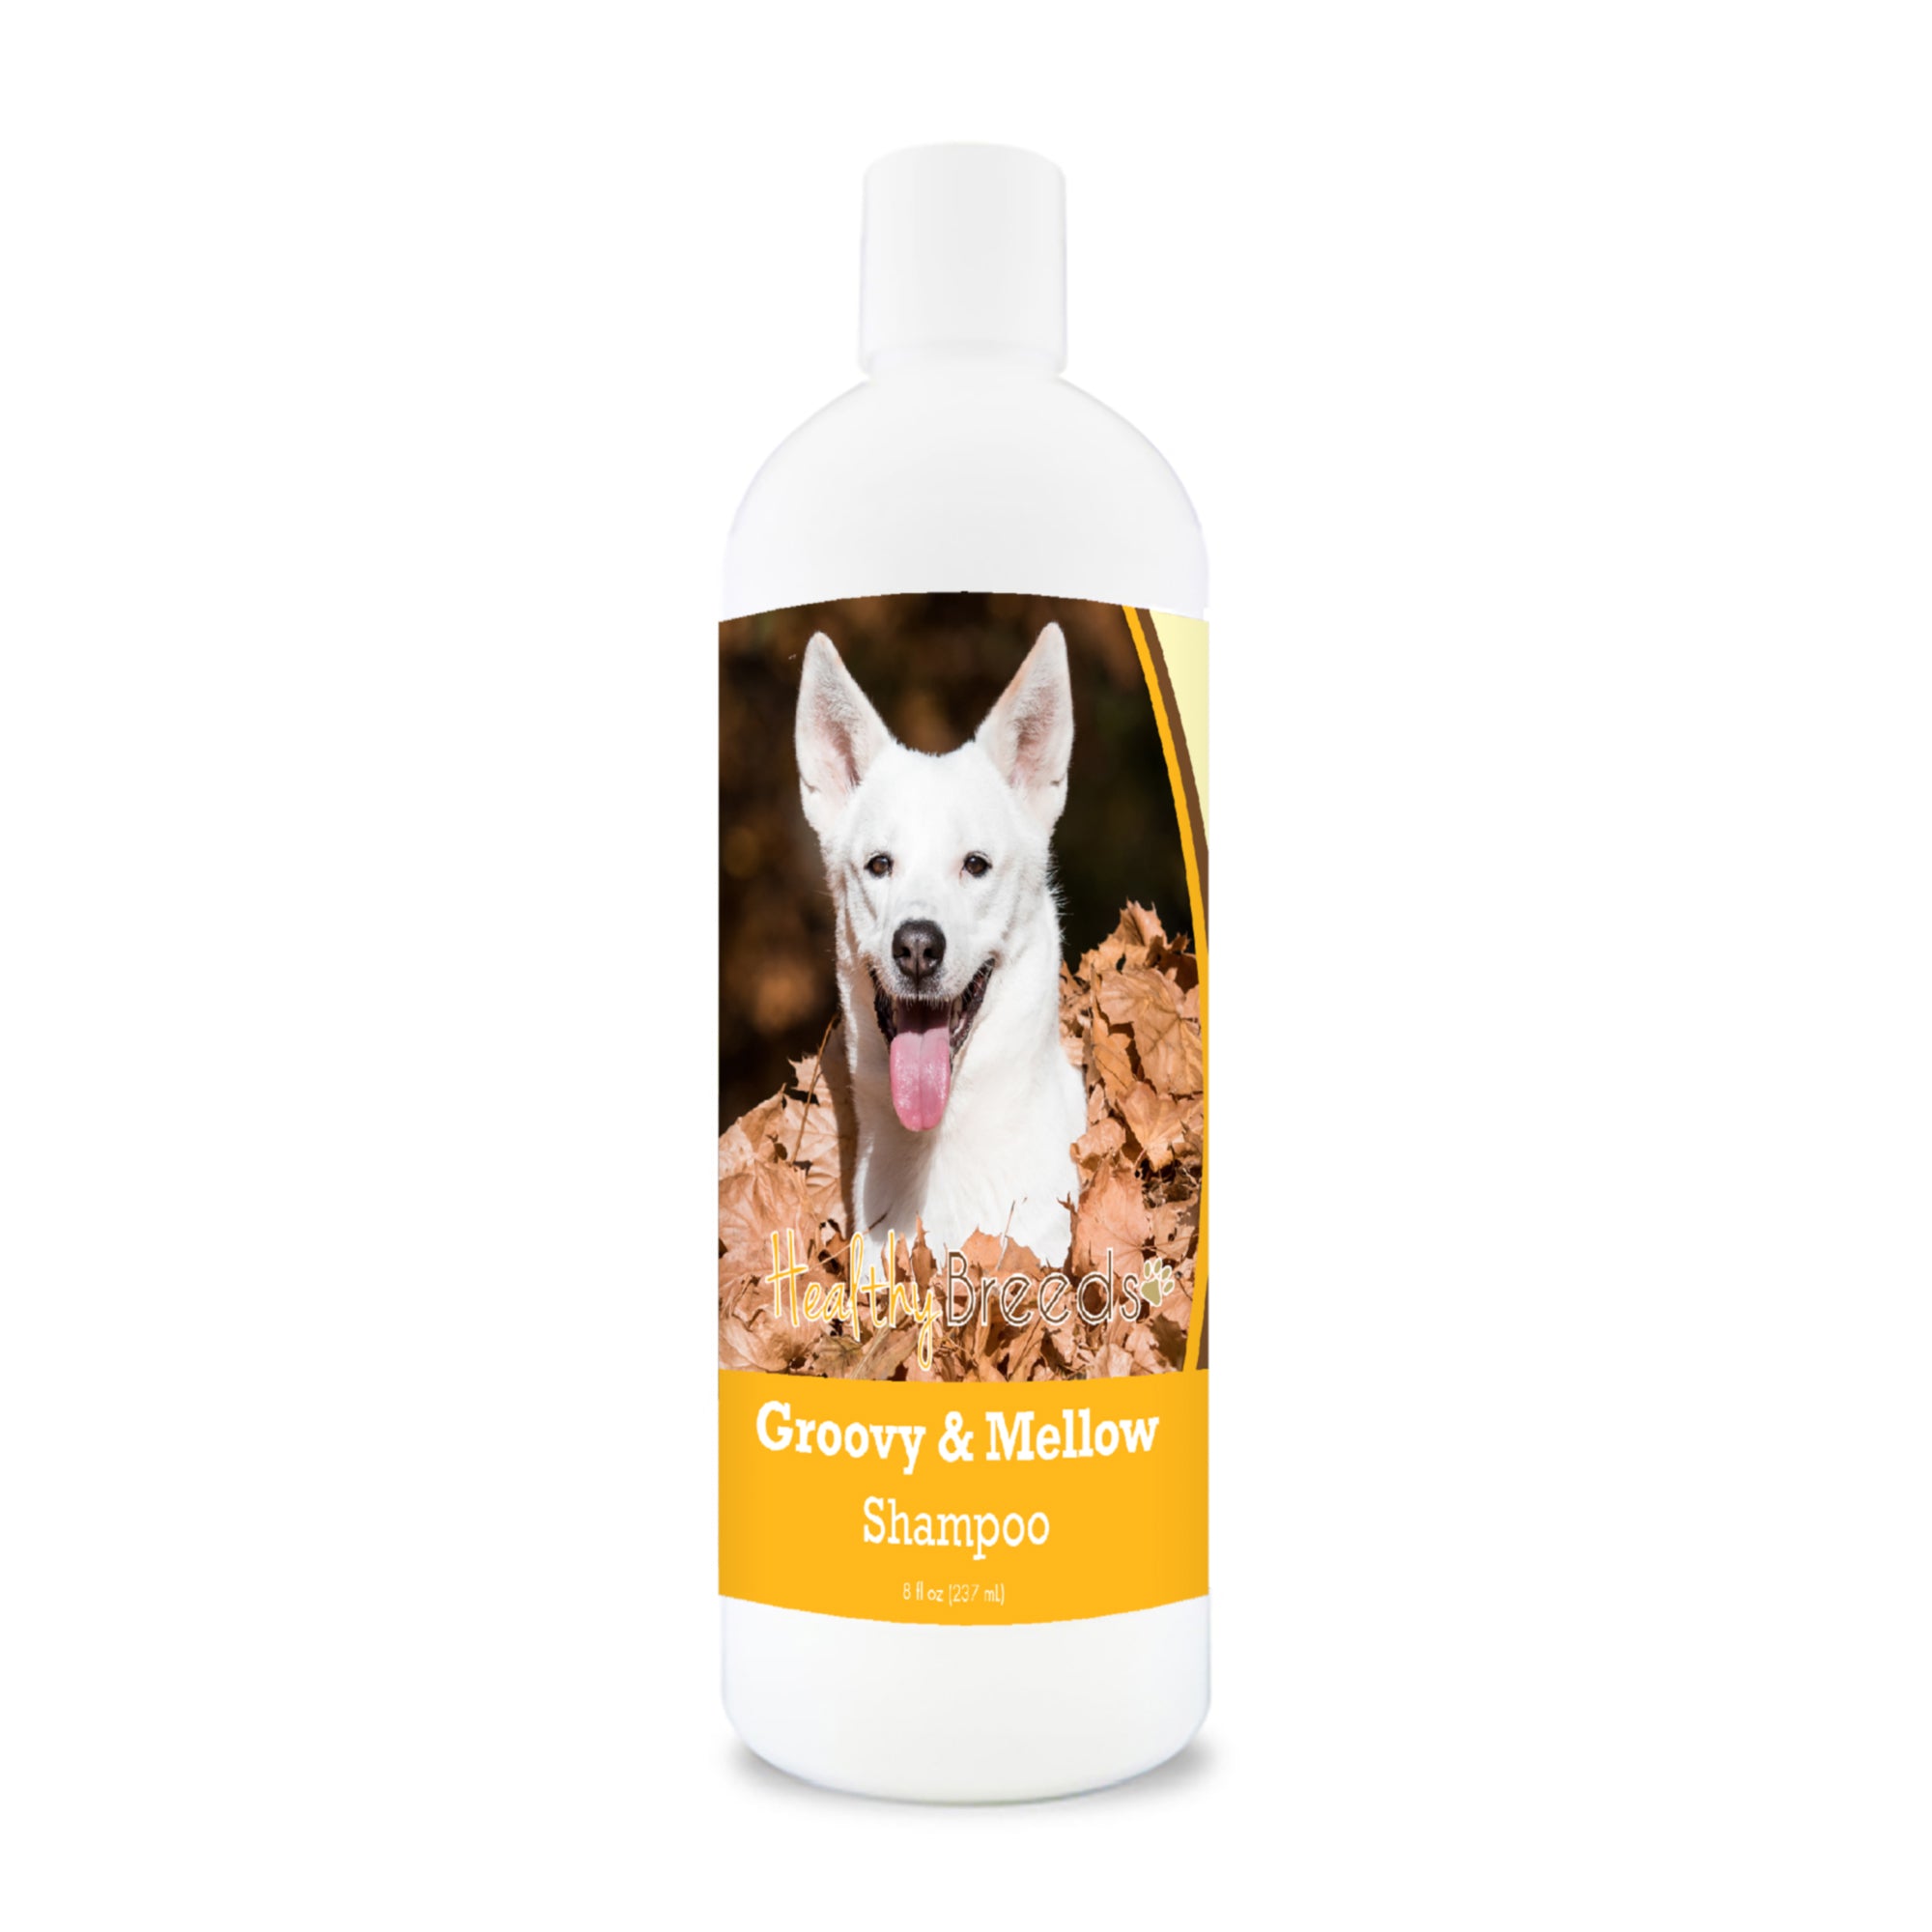 Canaan Dog Groovy & Mellow Shampoo 8 oz